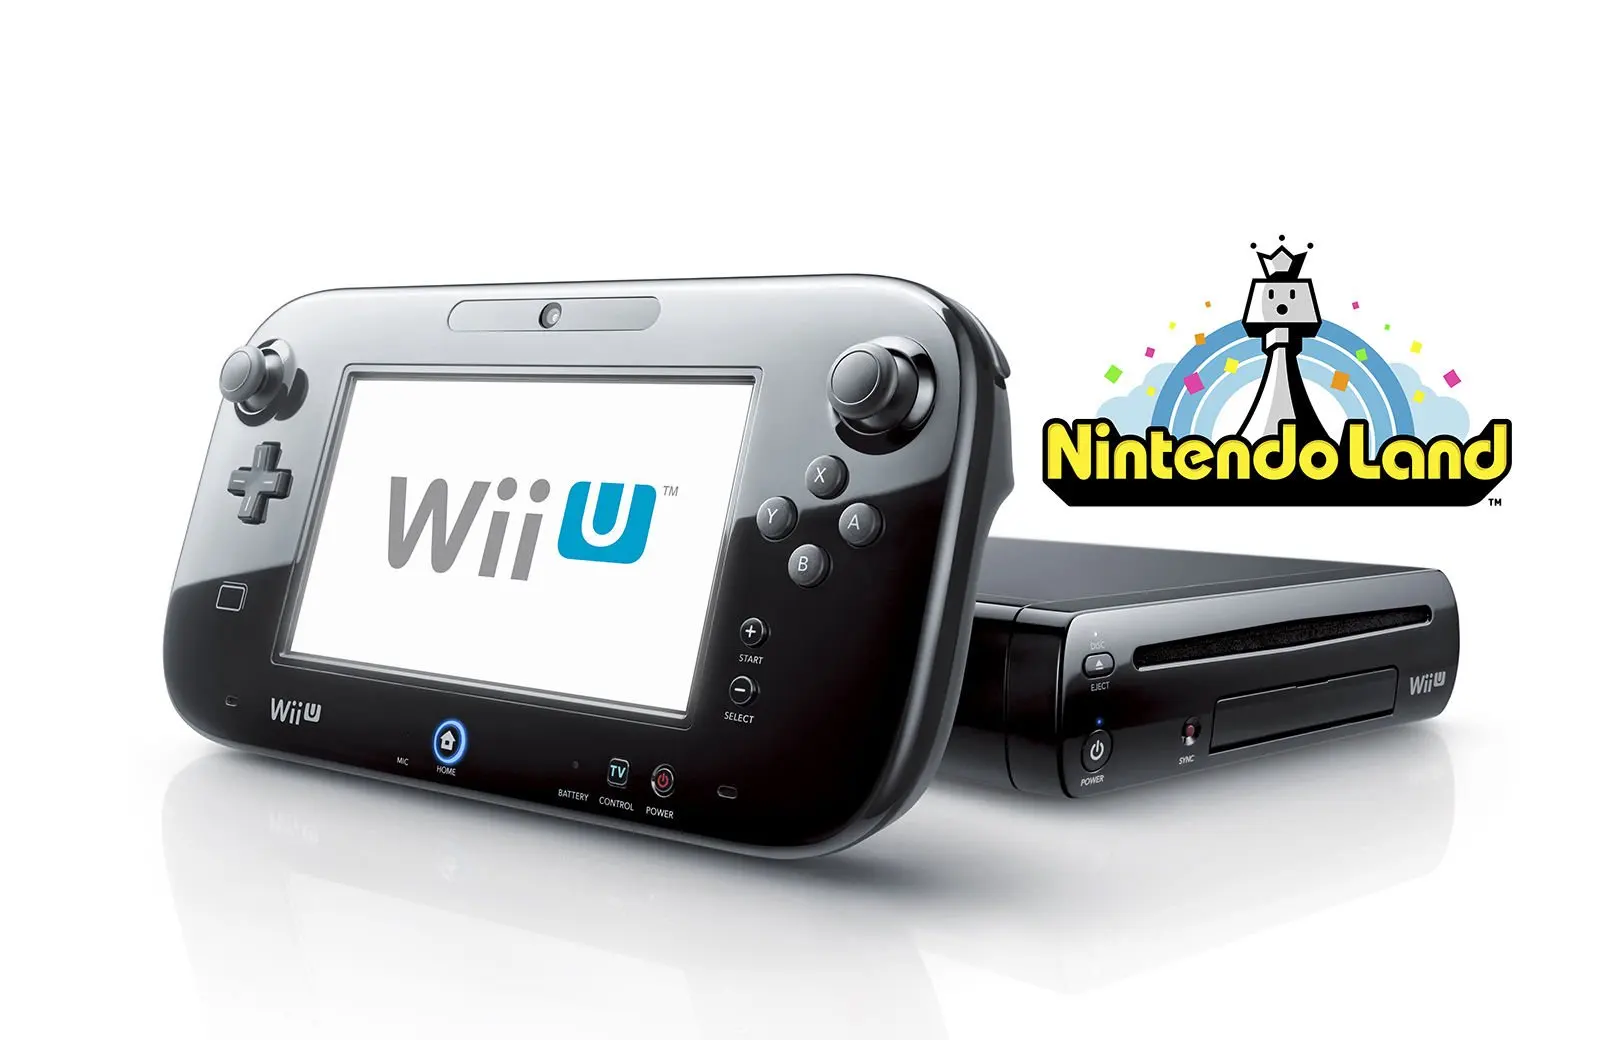 Buy Nintendo Wii U 32GB Deluxe Set in Cheap Price on Alibaba.com